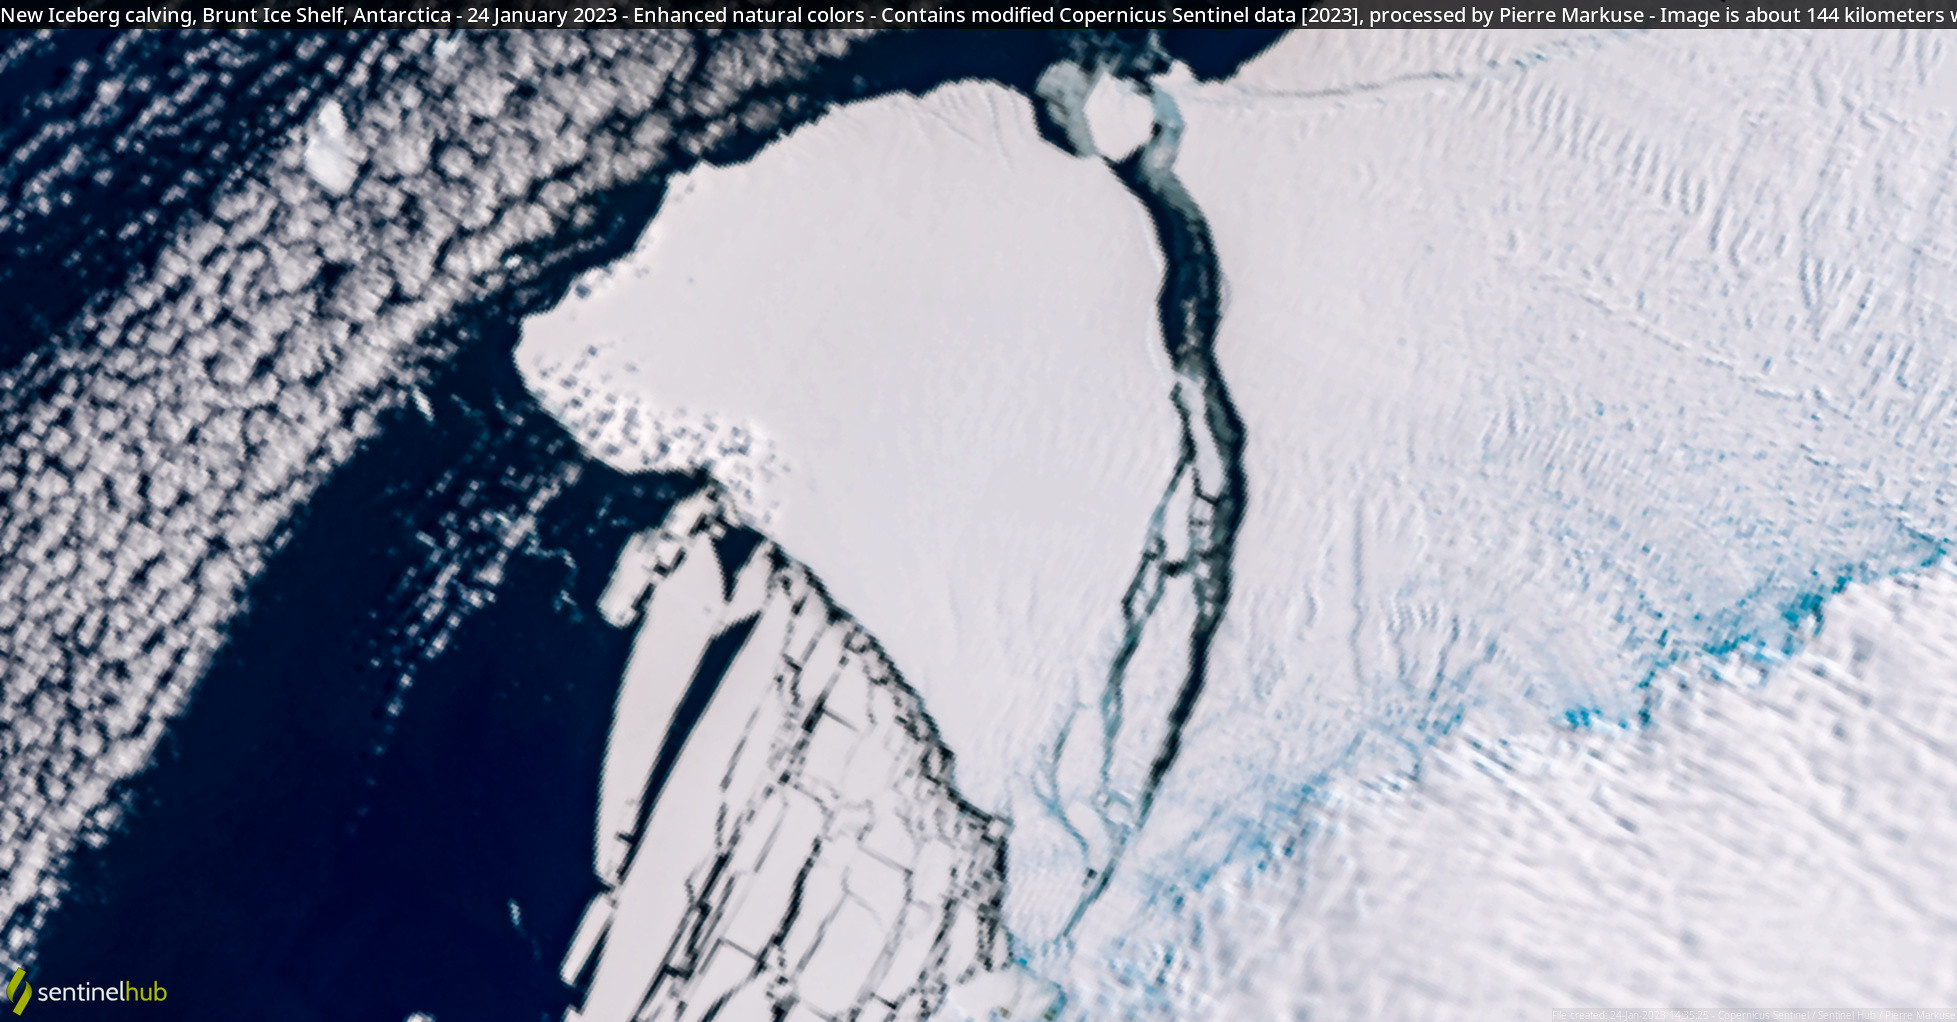 New Iceberg calving, Brunt Ice Shelf, Antarctica - 24 January 2023